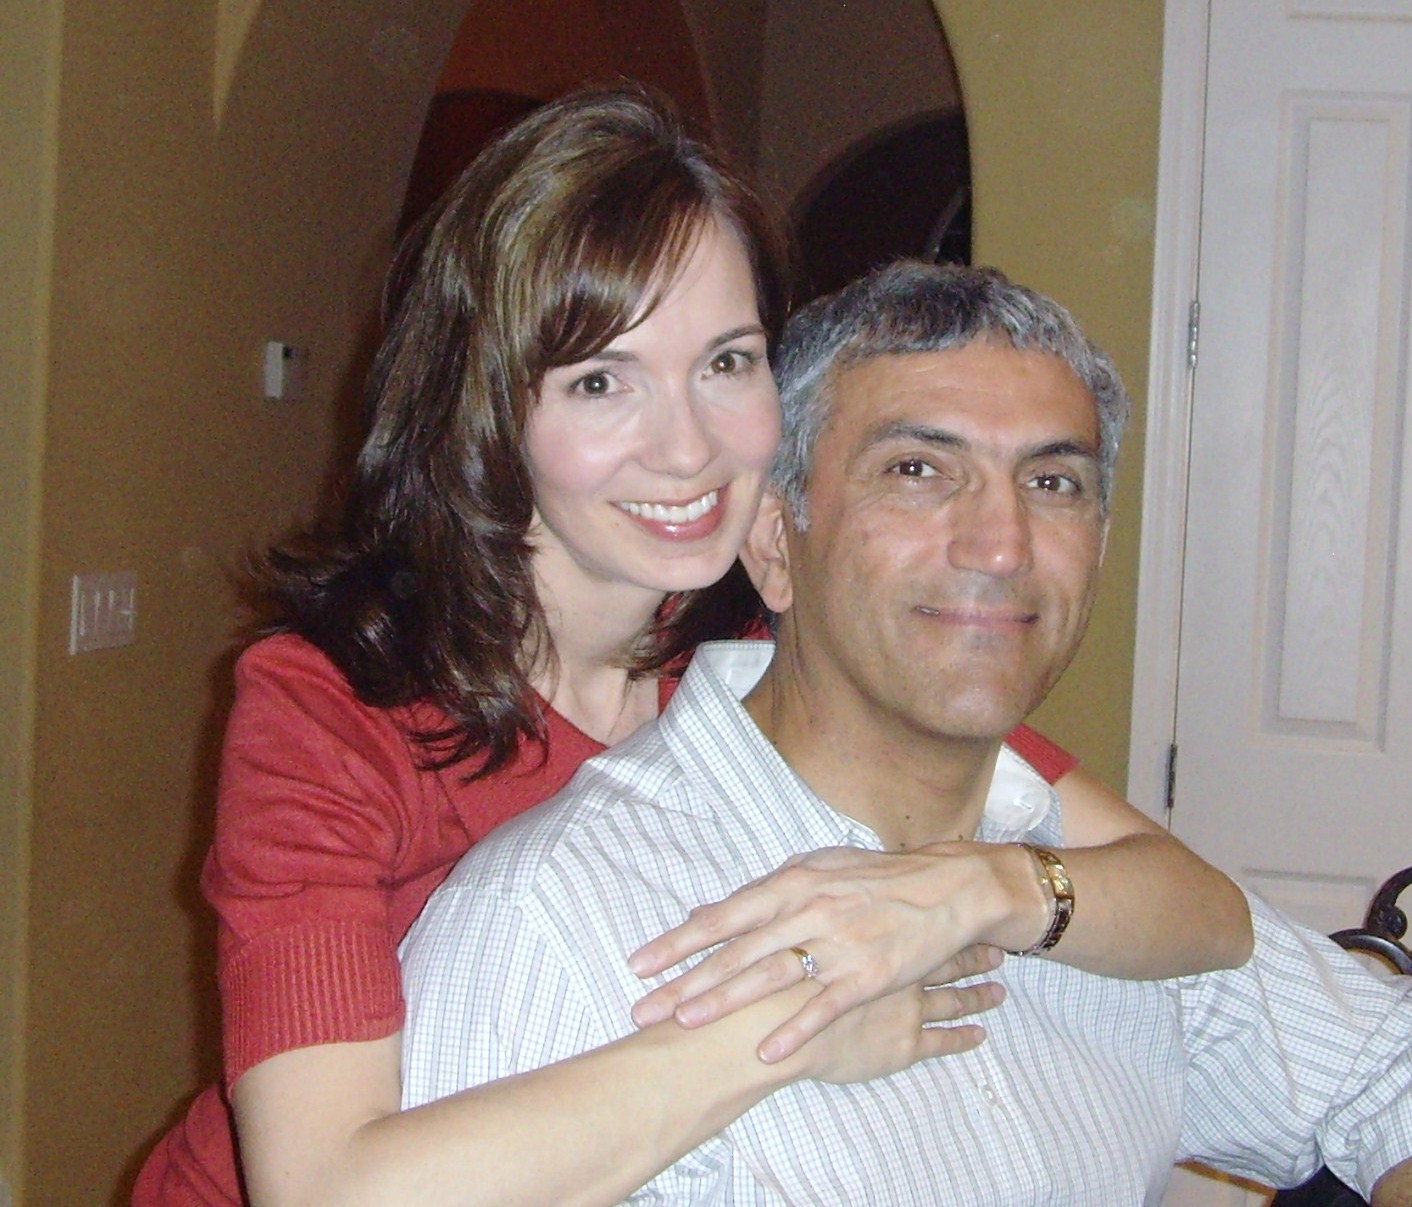 White and Iranian couple